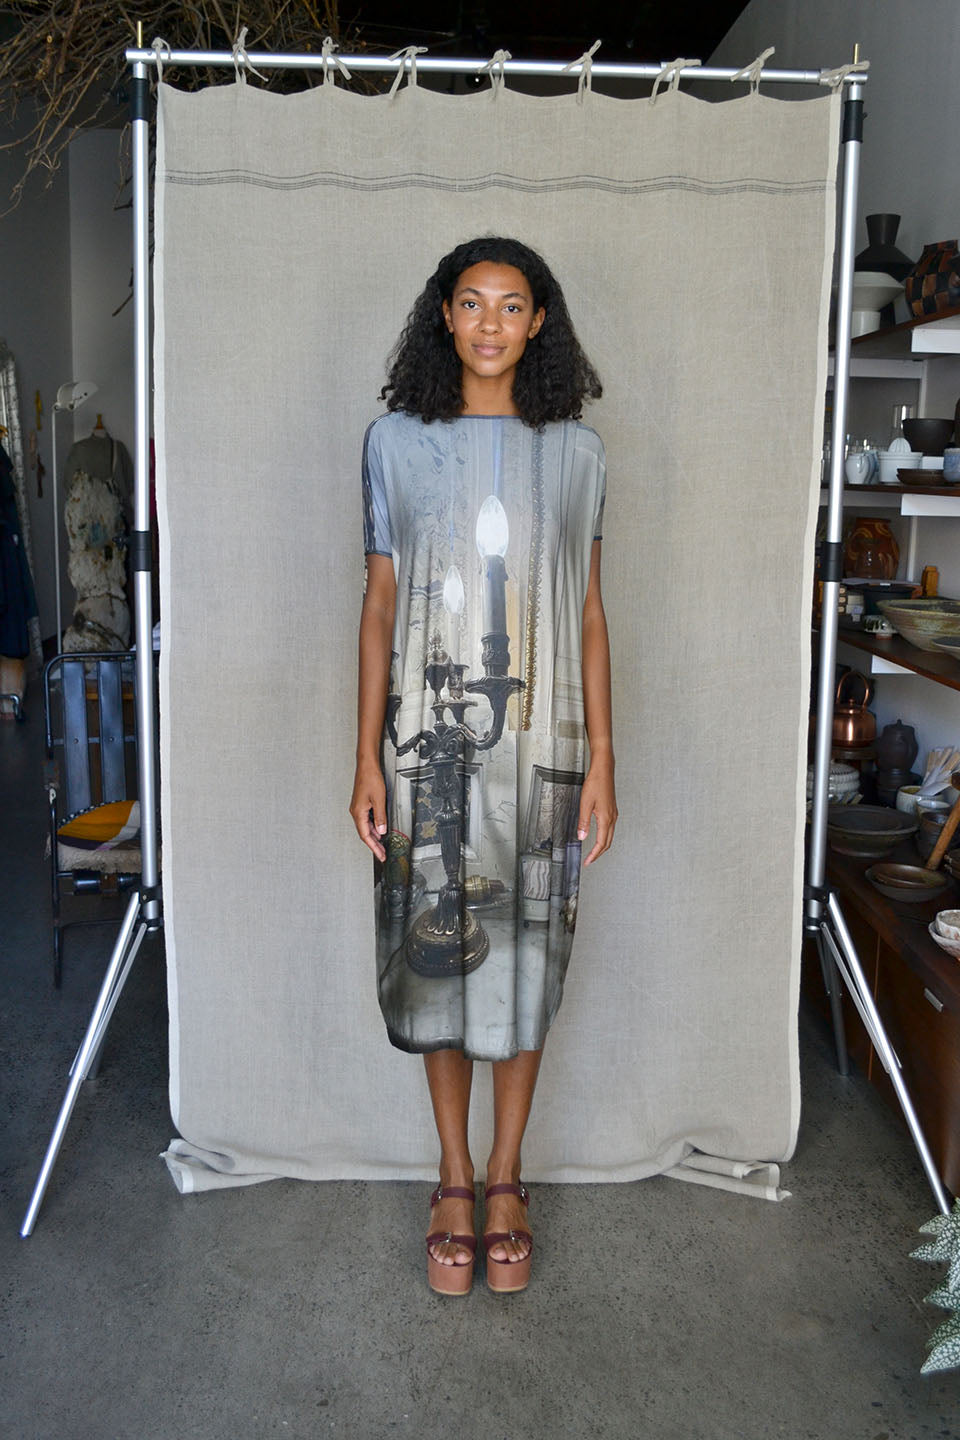 Printed Tube Dress